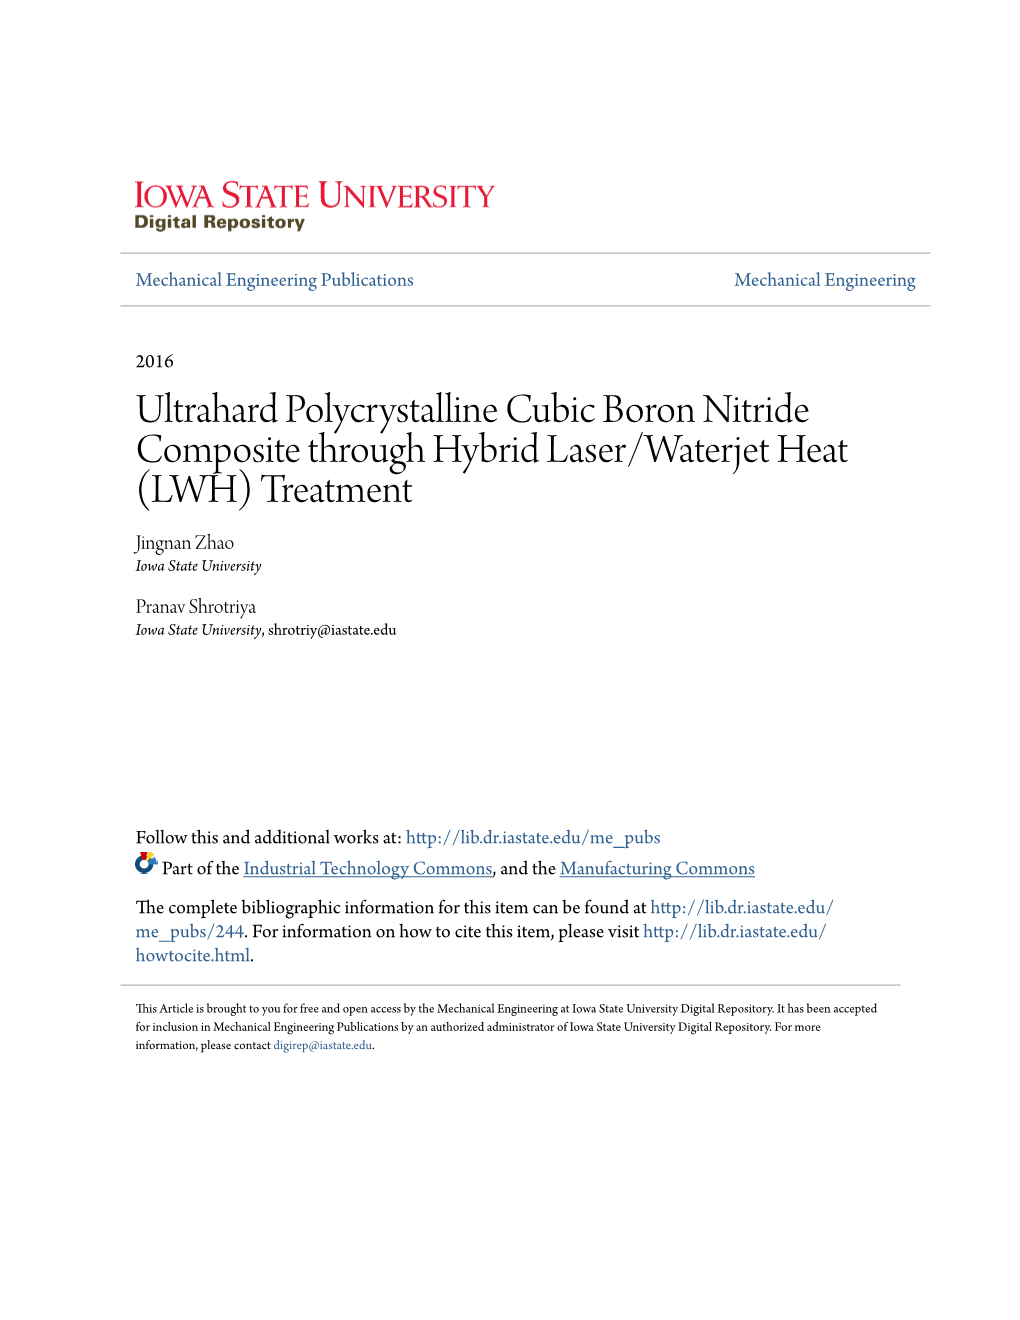 Ultrahard Polycrystalline Cubic Boron Nitride Composite Through Hybrid Laser/Waterjet Heat (LWH) Treatment Jingnan Zhao Iowa State University